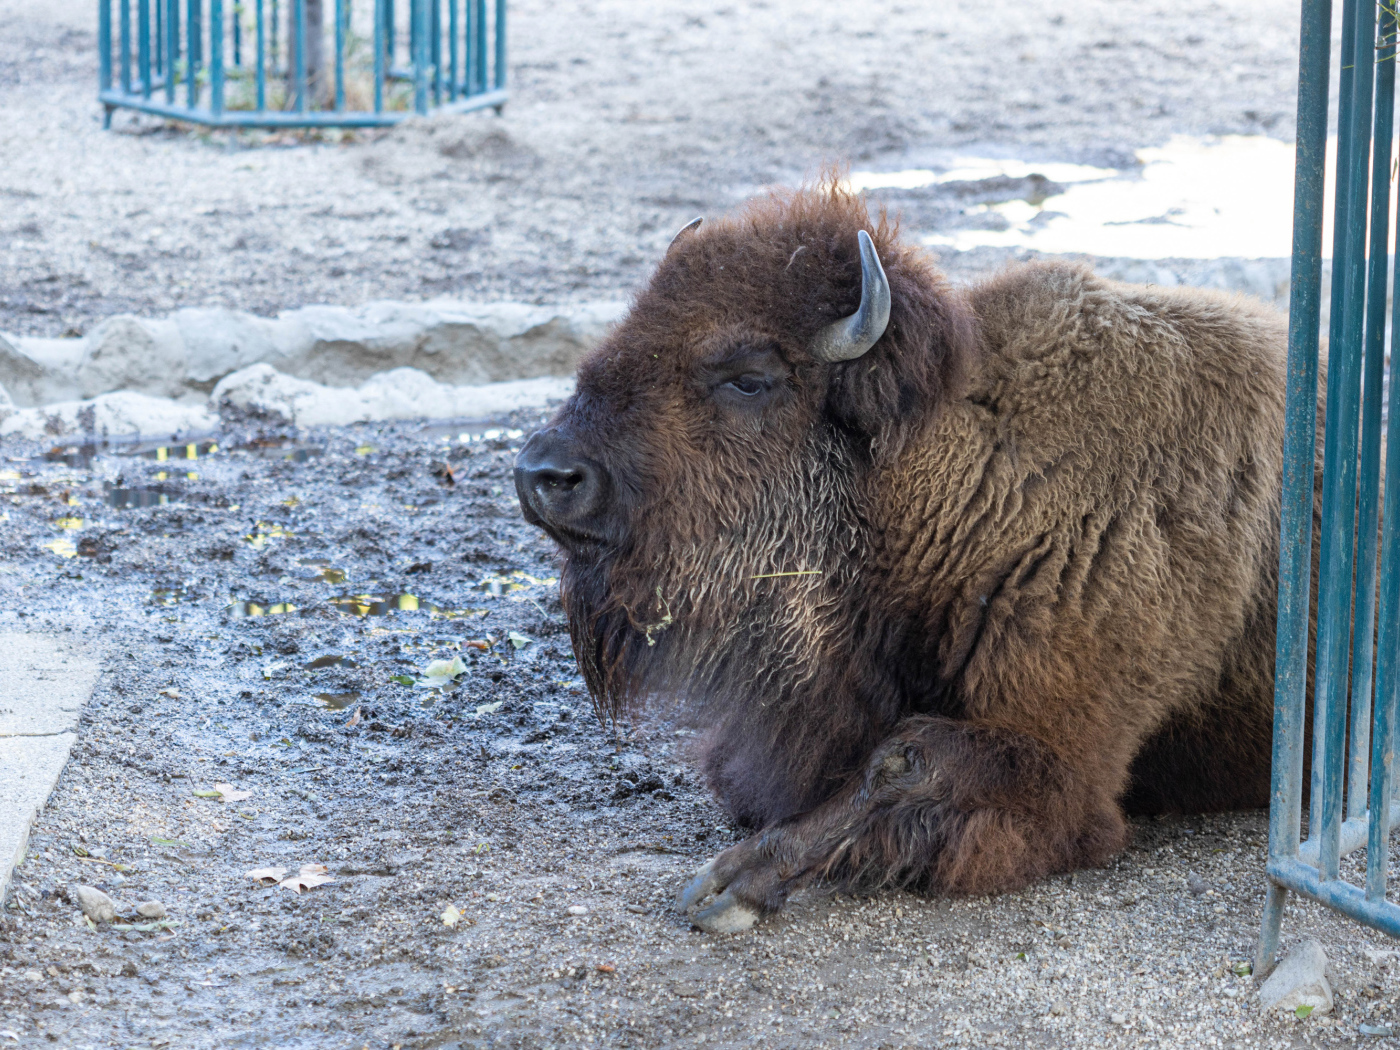 Big American bison lies in the mud